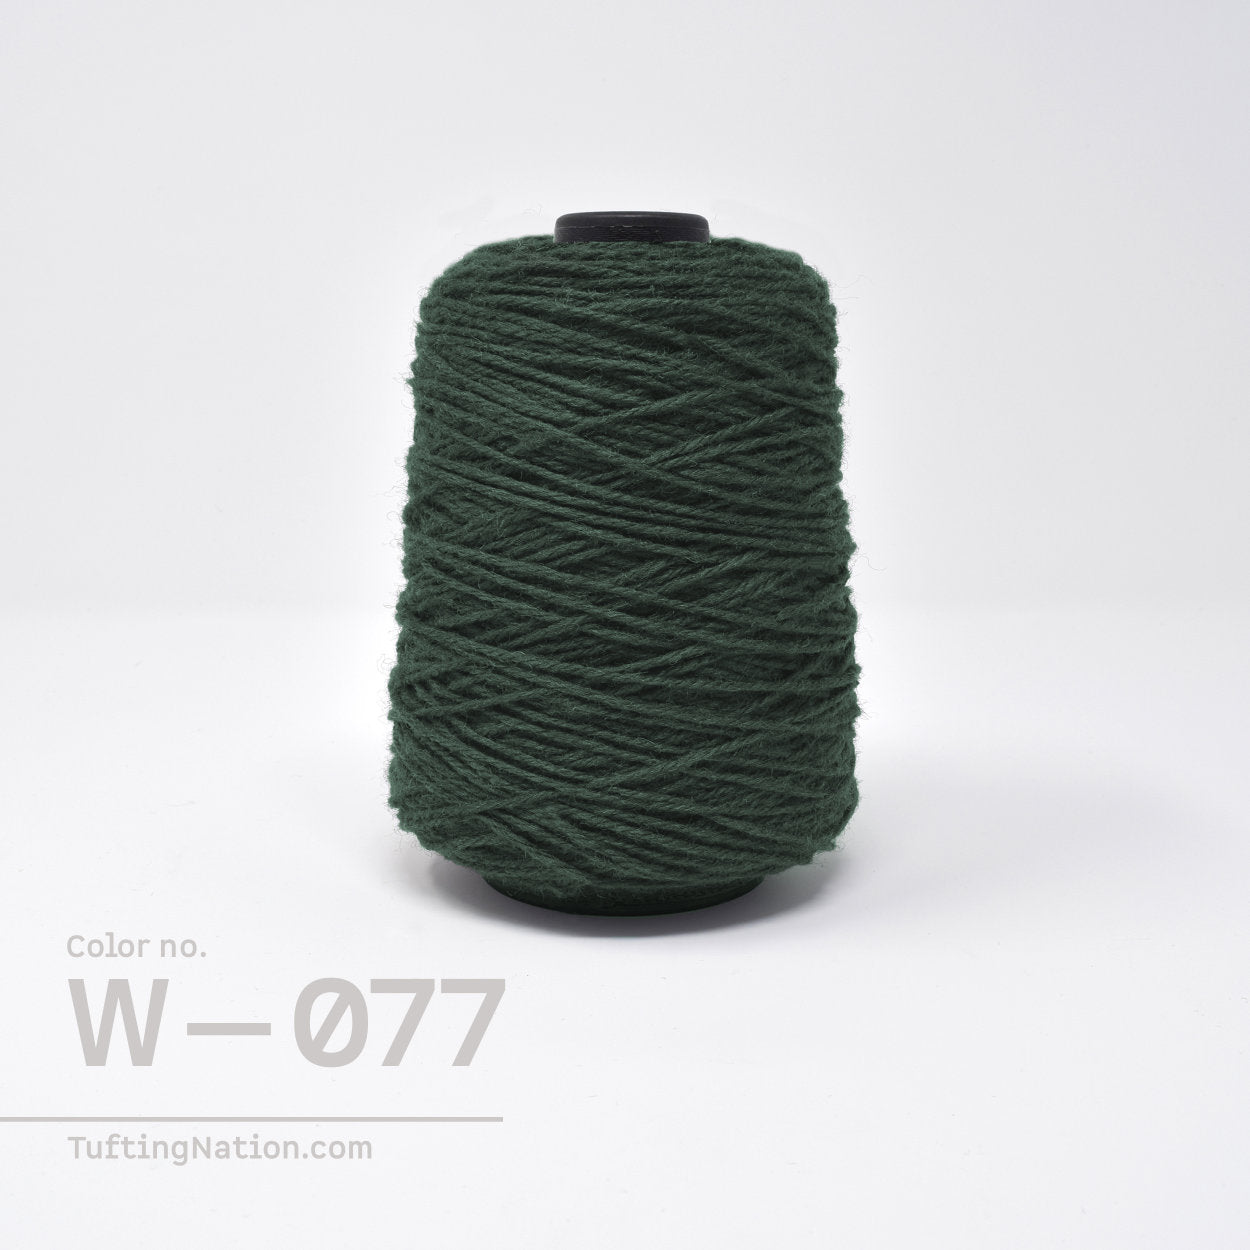 Dark Green Wool Tufting Yarn on Cones for Rug making | TuftingNation